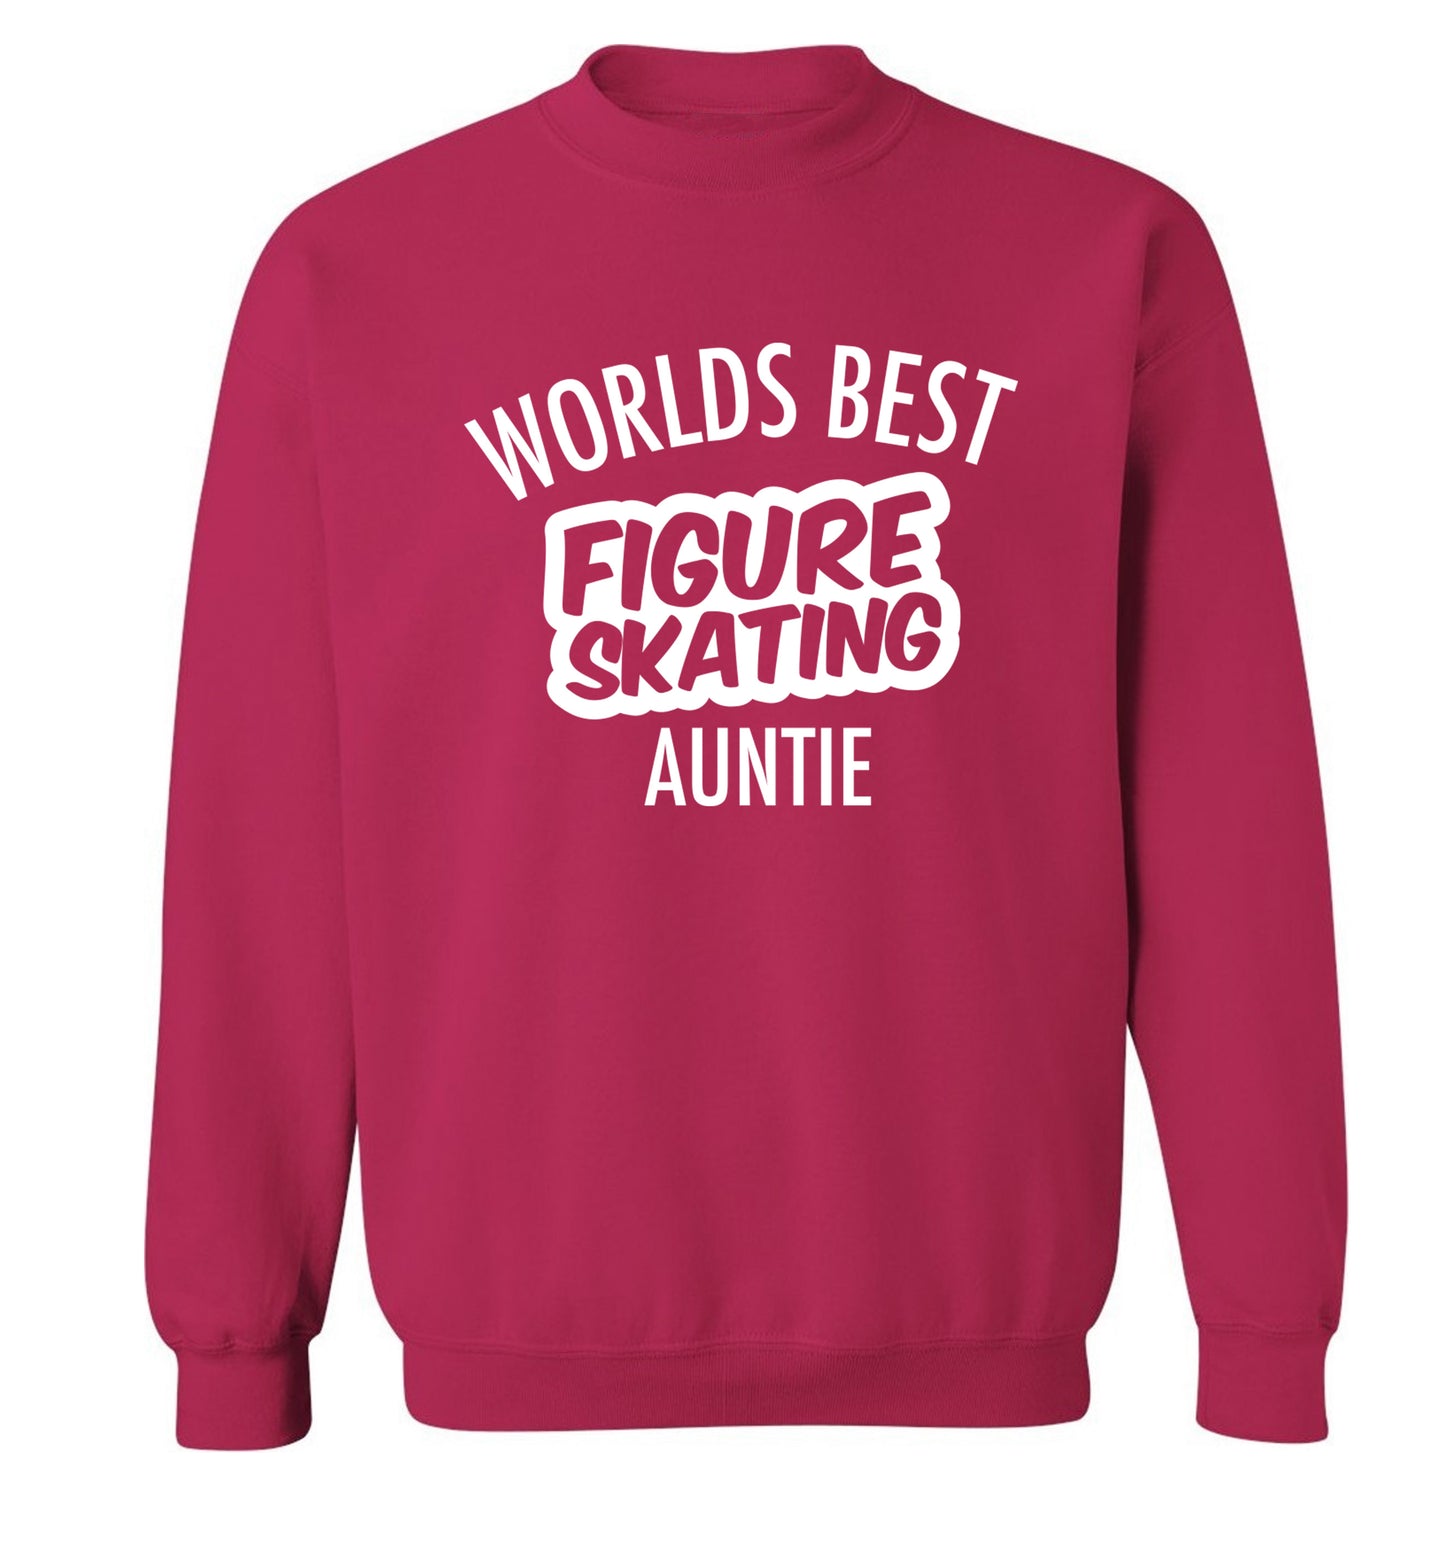 Worlds best figure skating auntie Adult's unisexpink Sweater 2XL